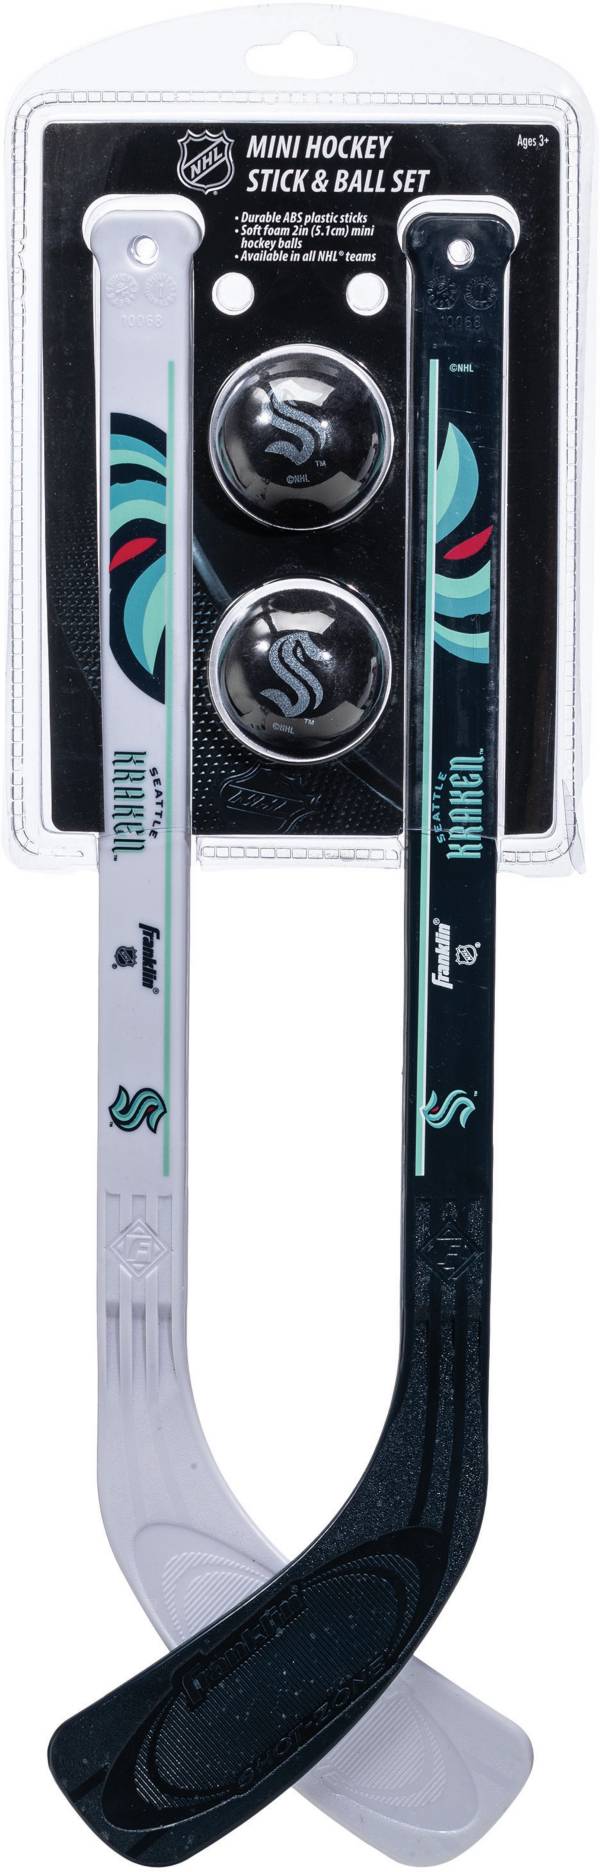 Franklin Seattle Kraken Mini Street Hockey Player Stick and Ball Set product image